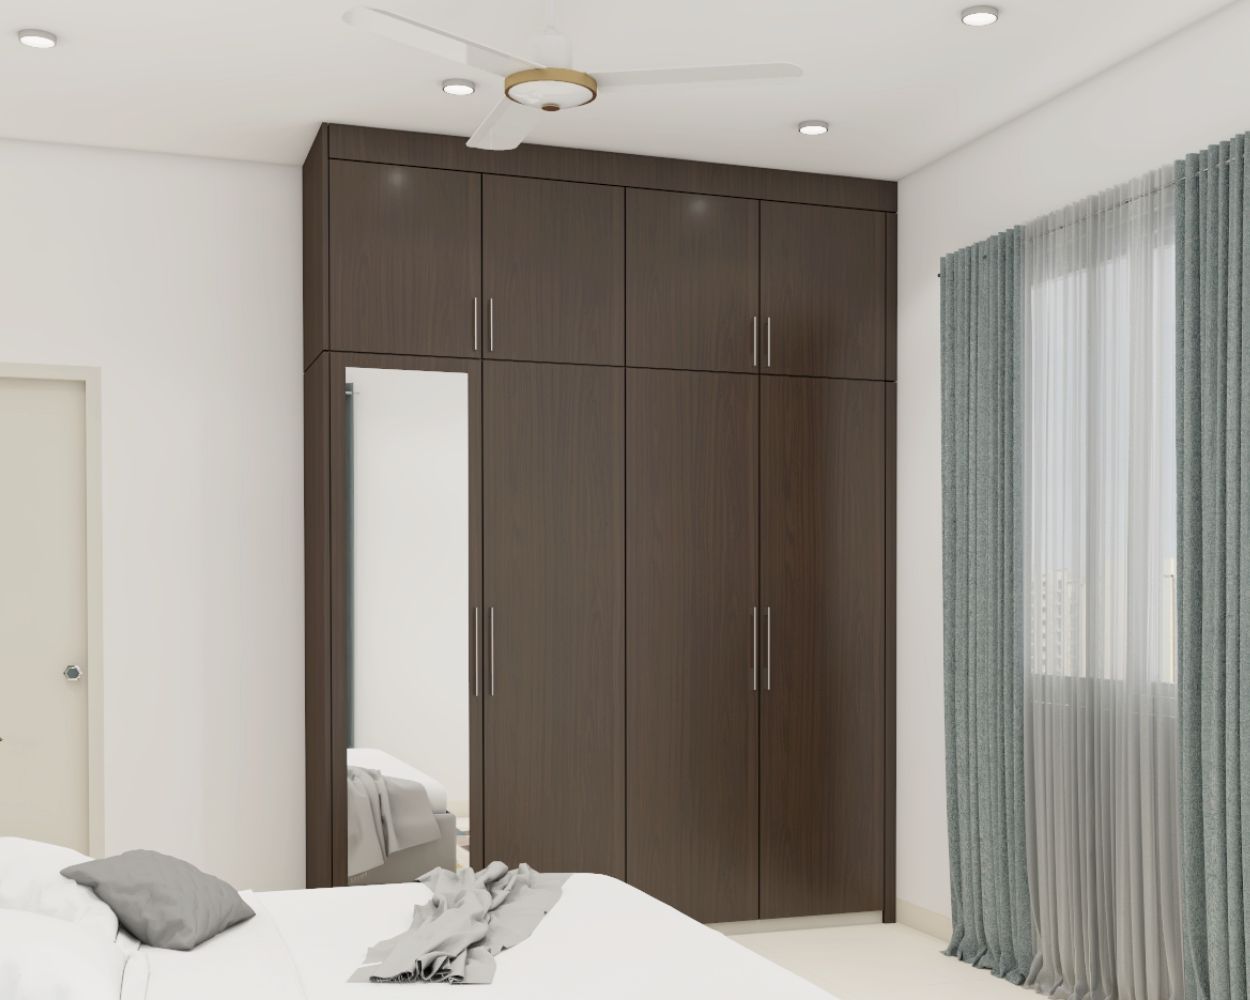 Modern Tawny Balsam 4-Door Swing Wardrobe Design With Mirror